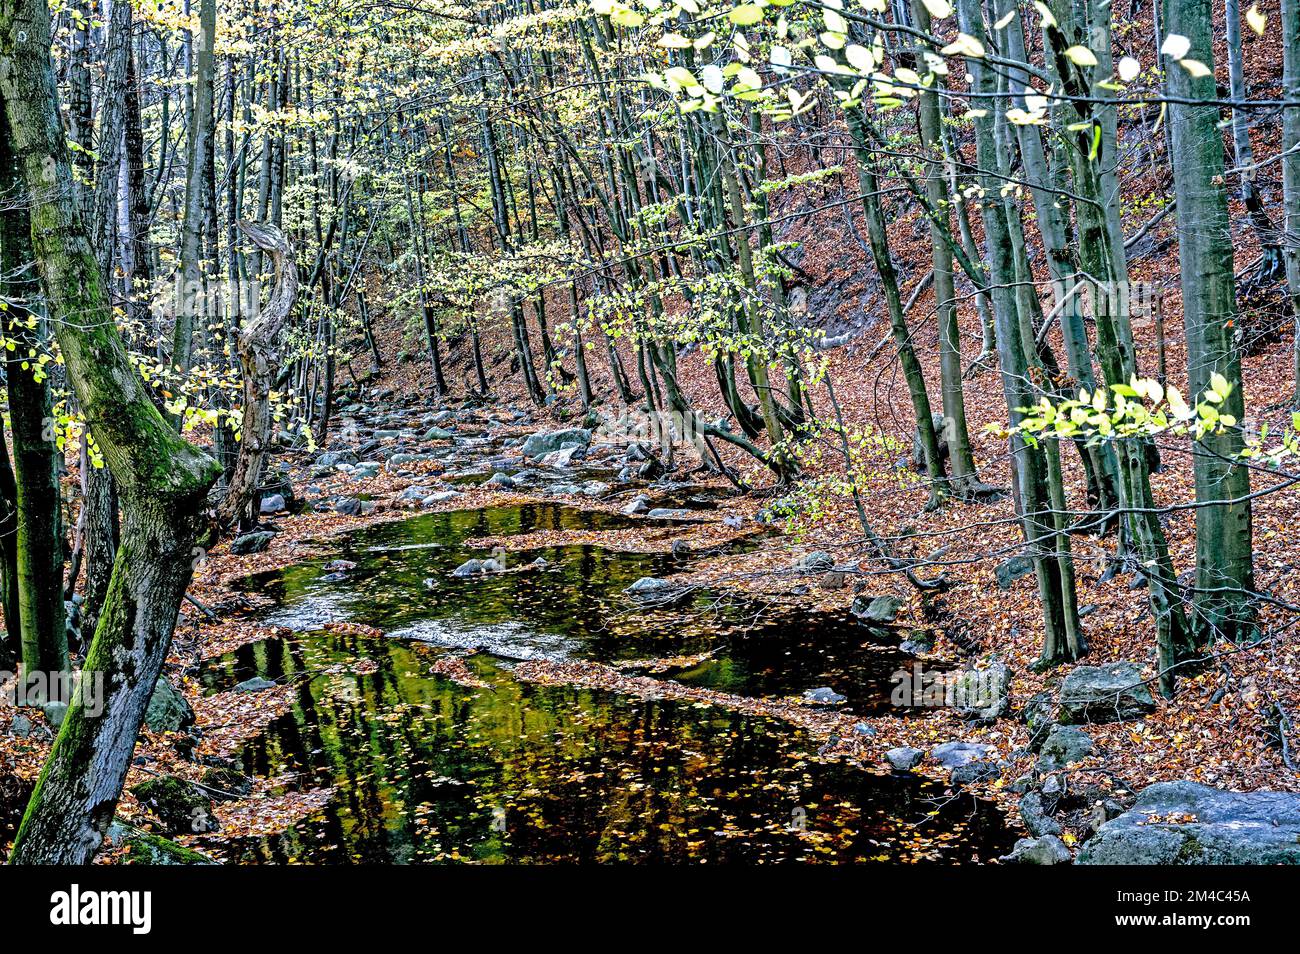 Ilsetal nahe Ilsenburg im Harz; Ilse River near Ilsenbur in the Harz Mountains, Germany Stock Photo